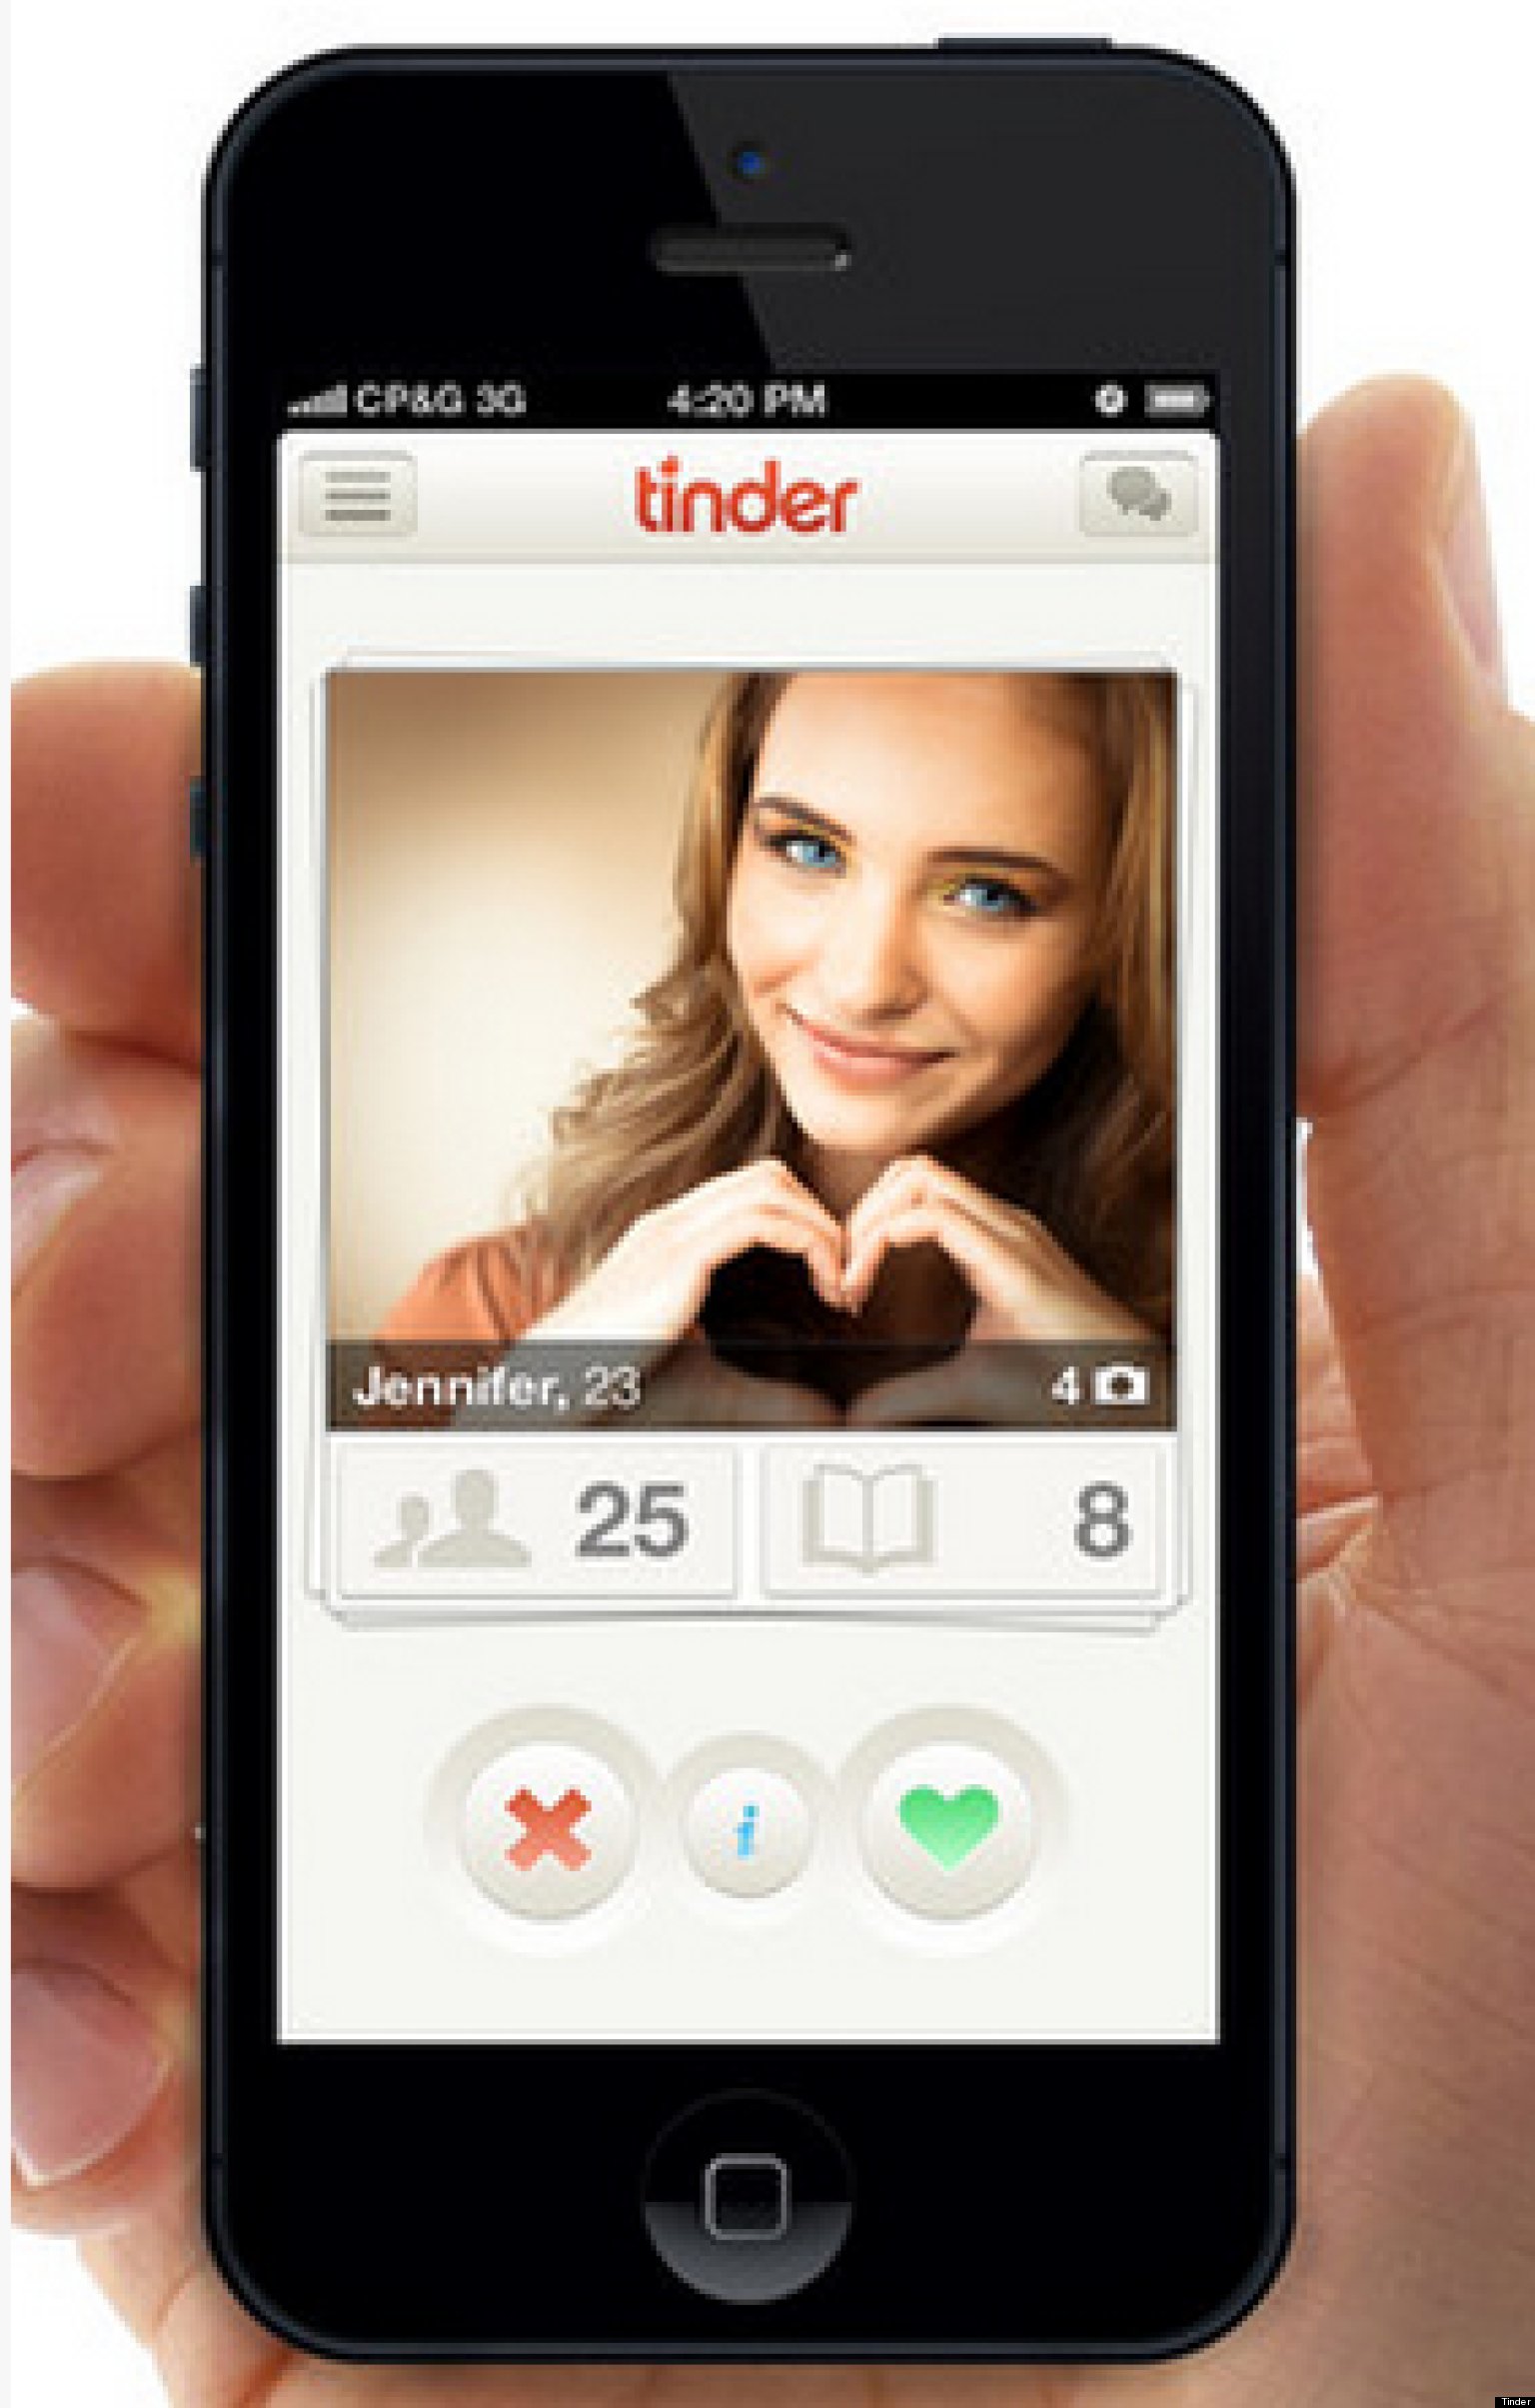 What is tender dating website